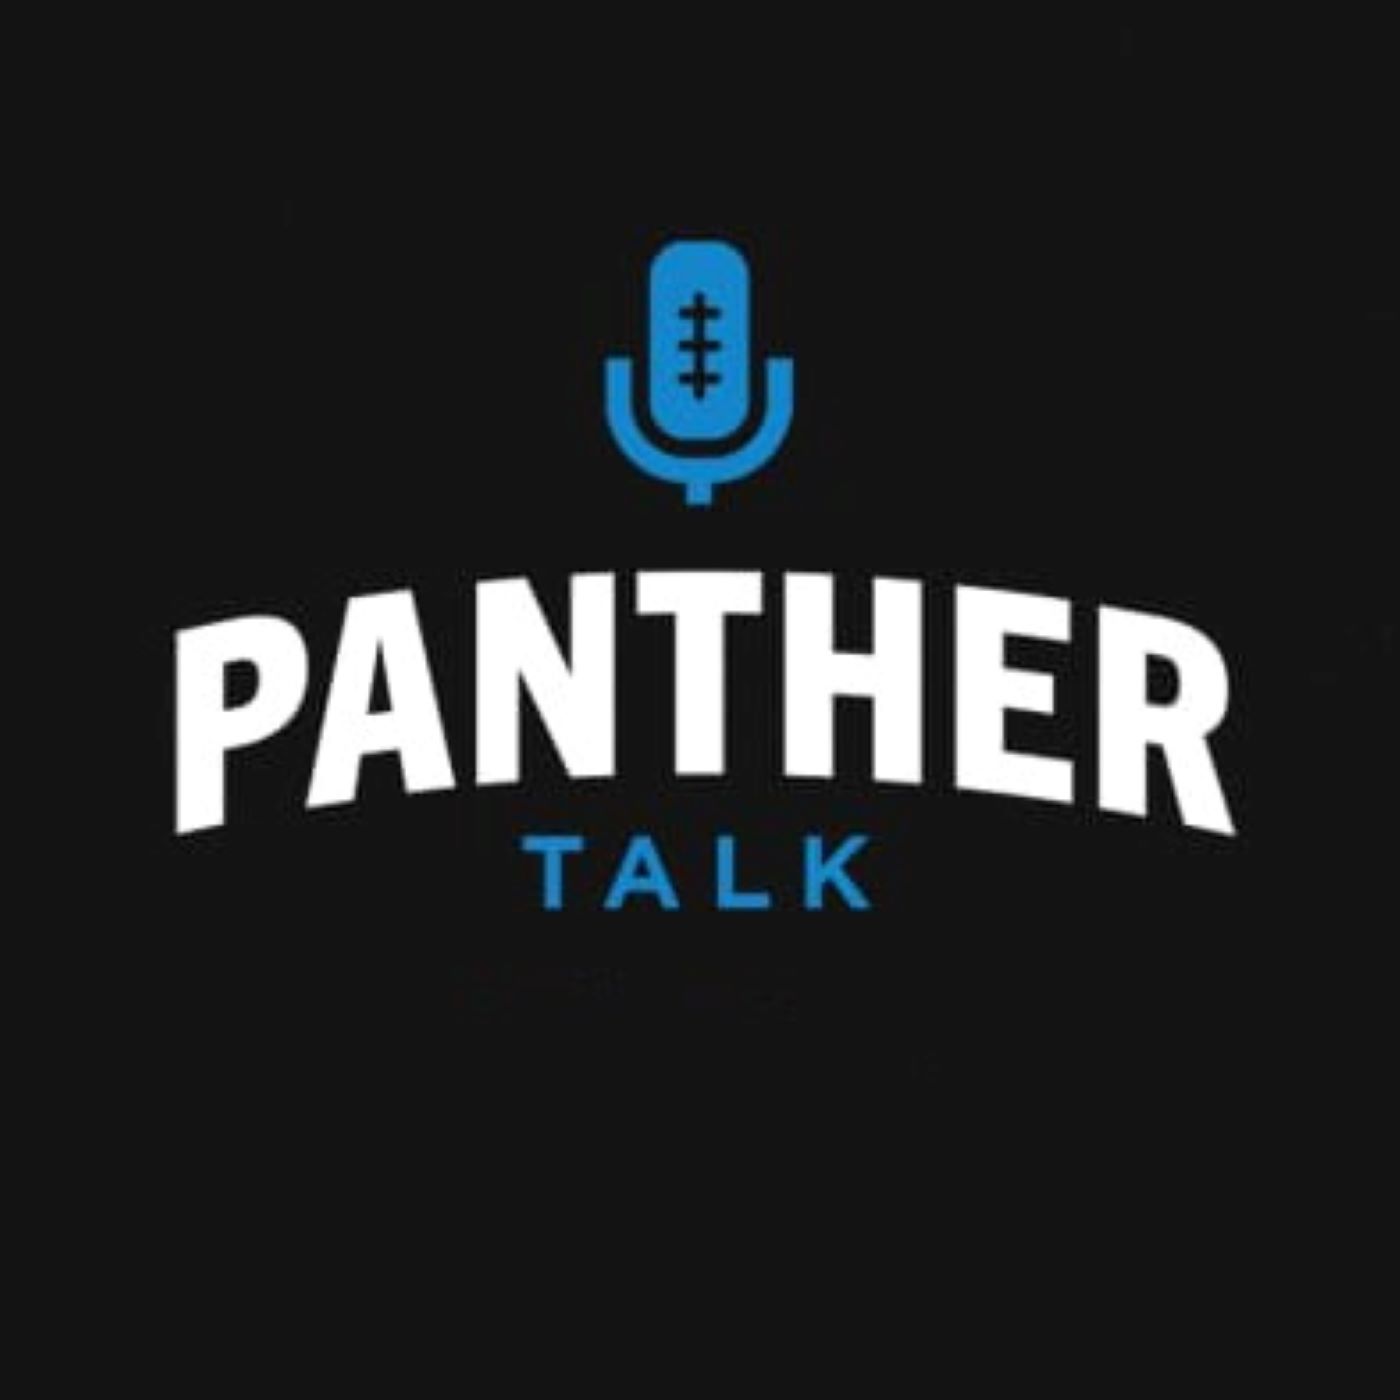 Panther Talk (November 15th)